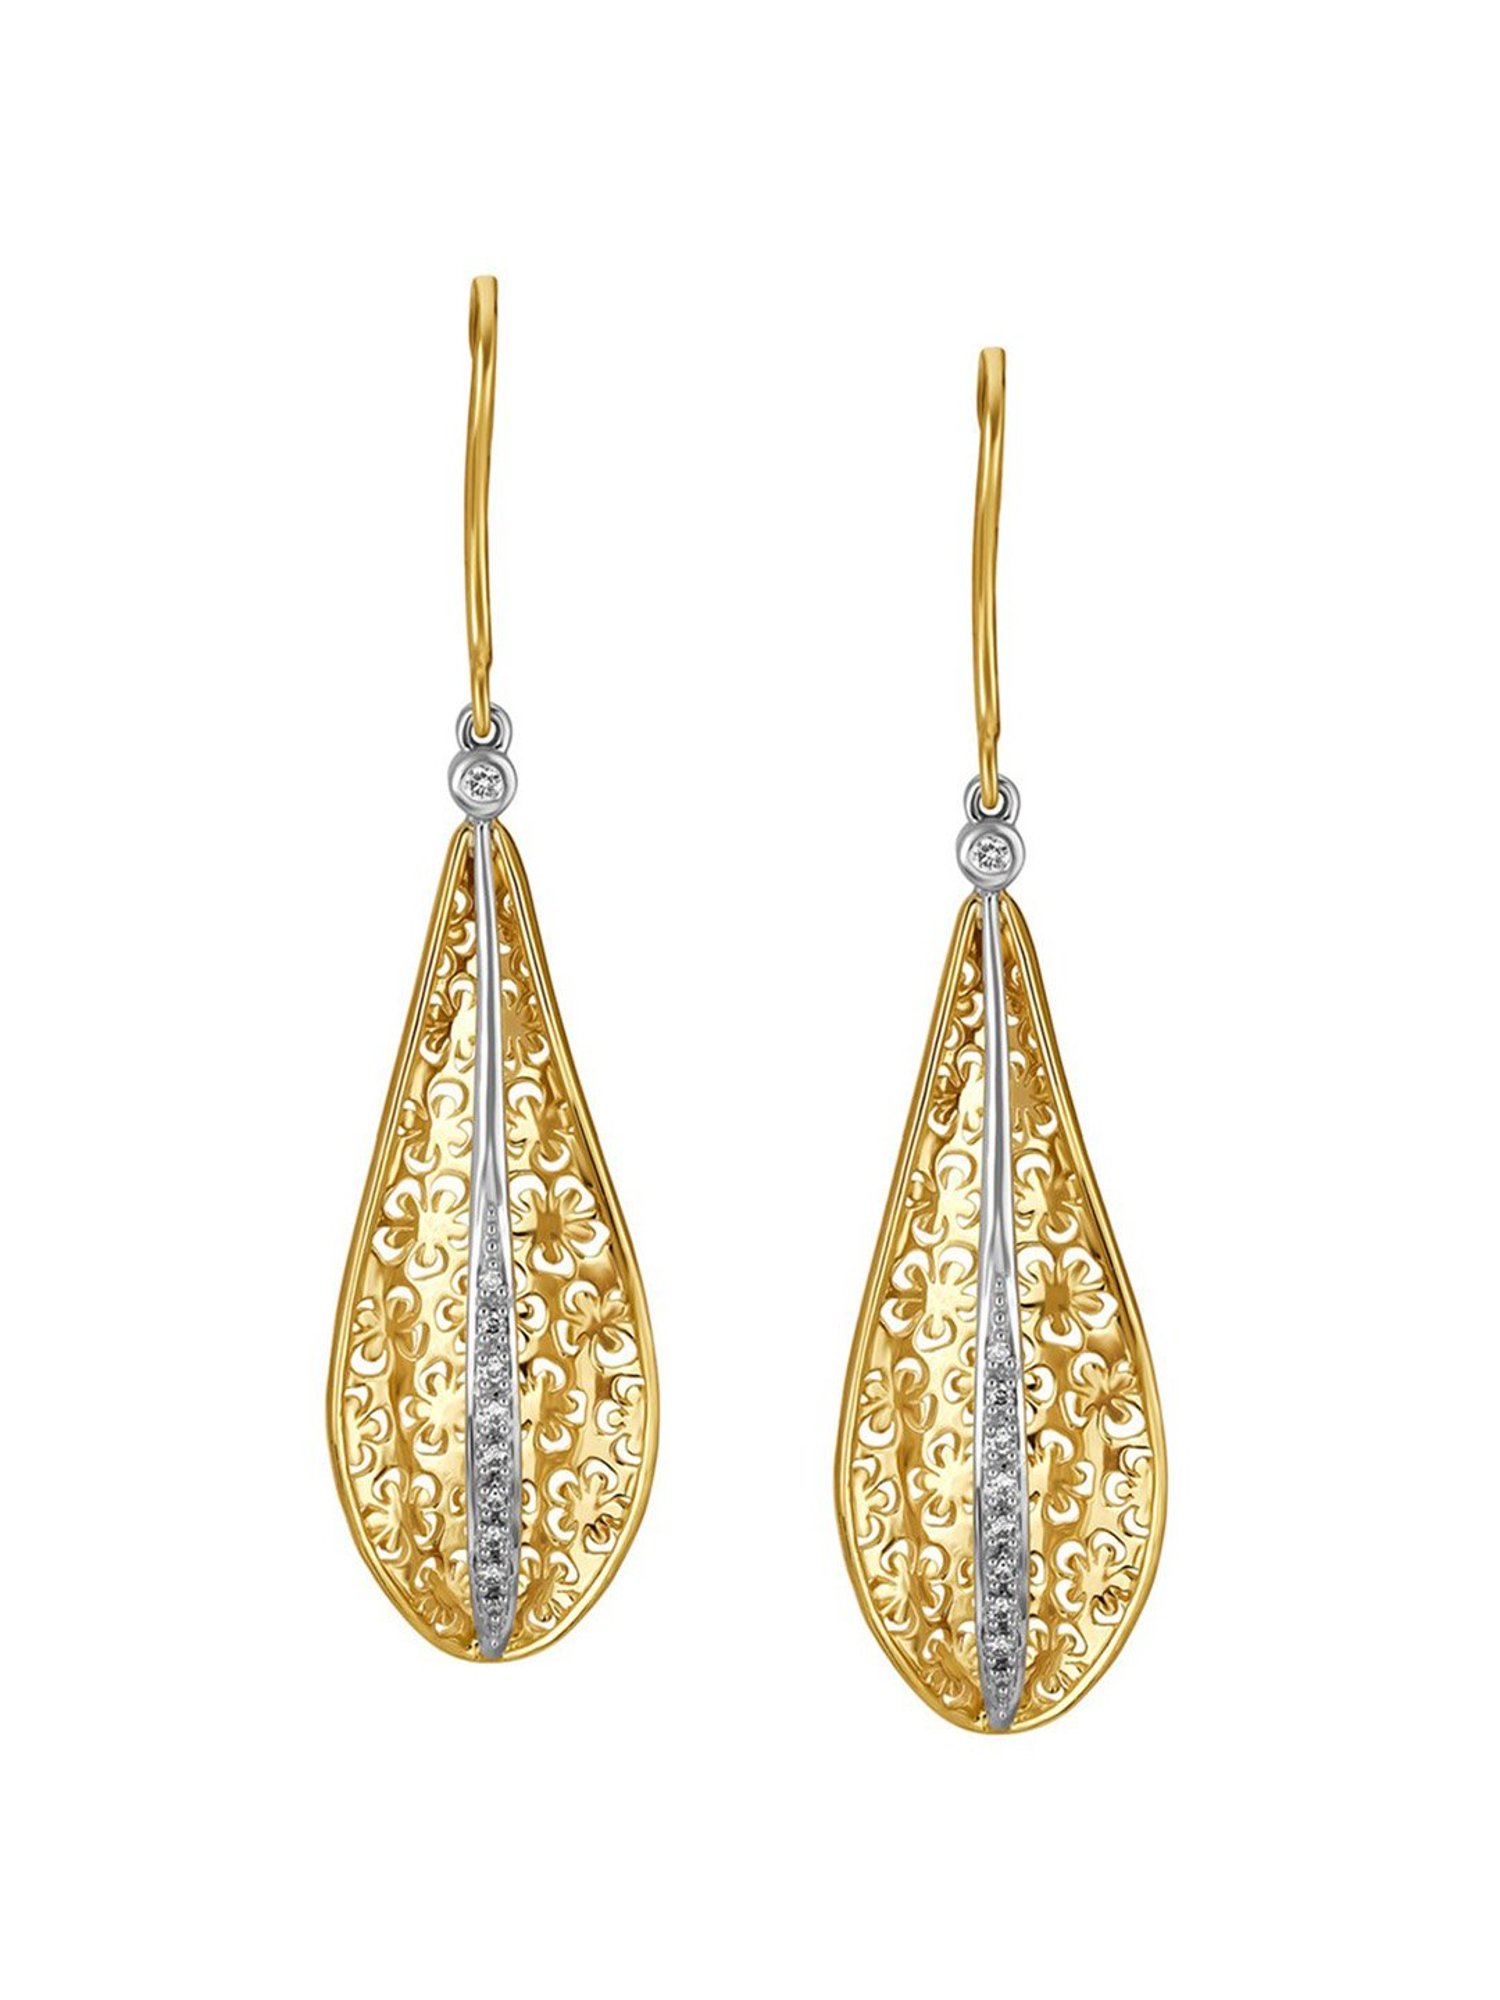 Fancy and Traditional Chandelier Gold Drop Earrings